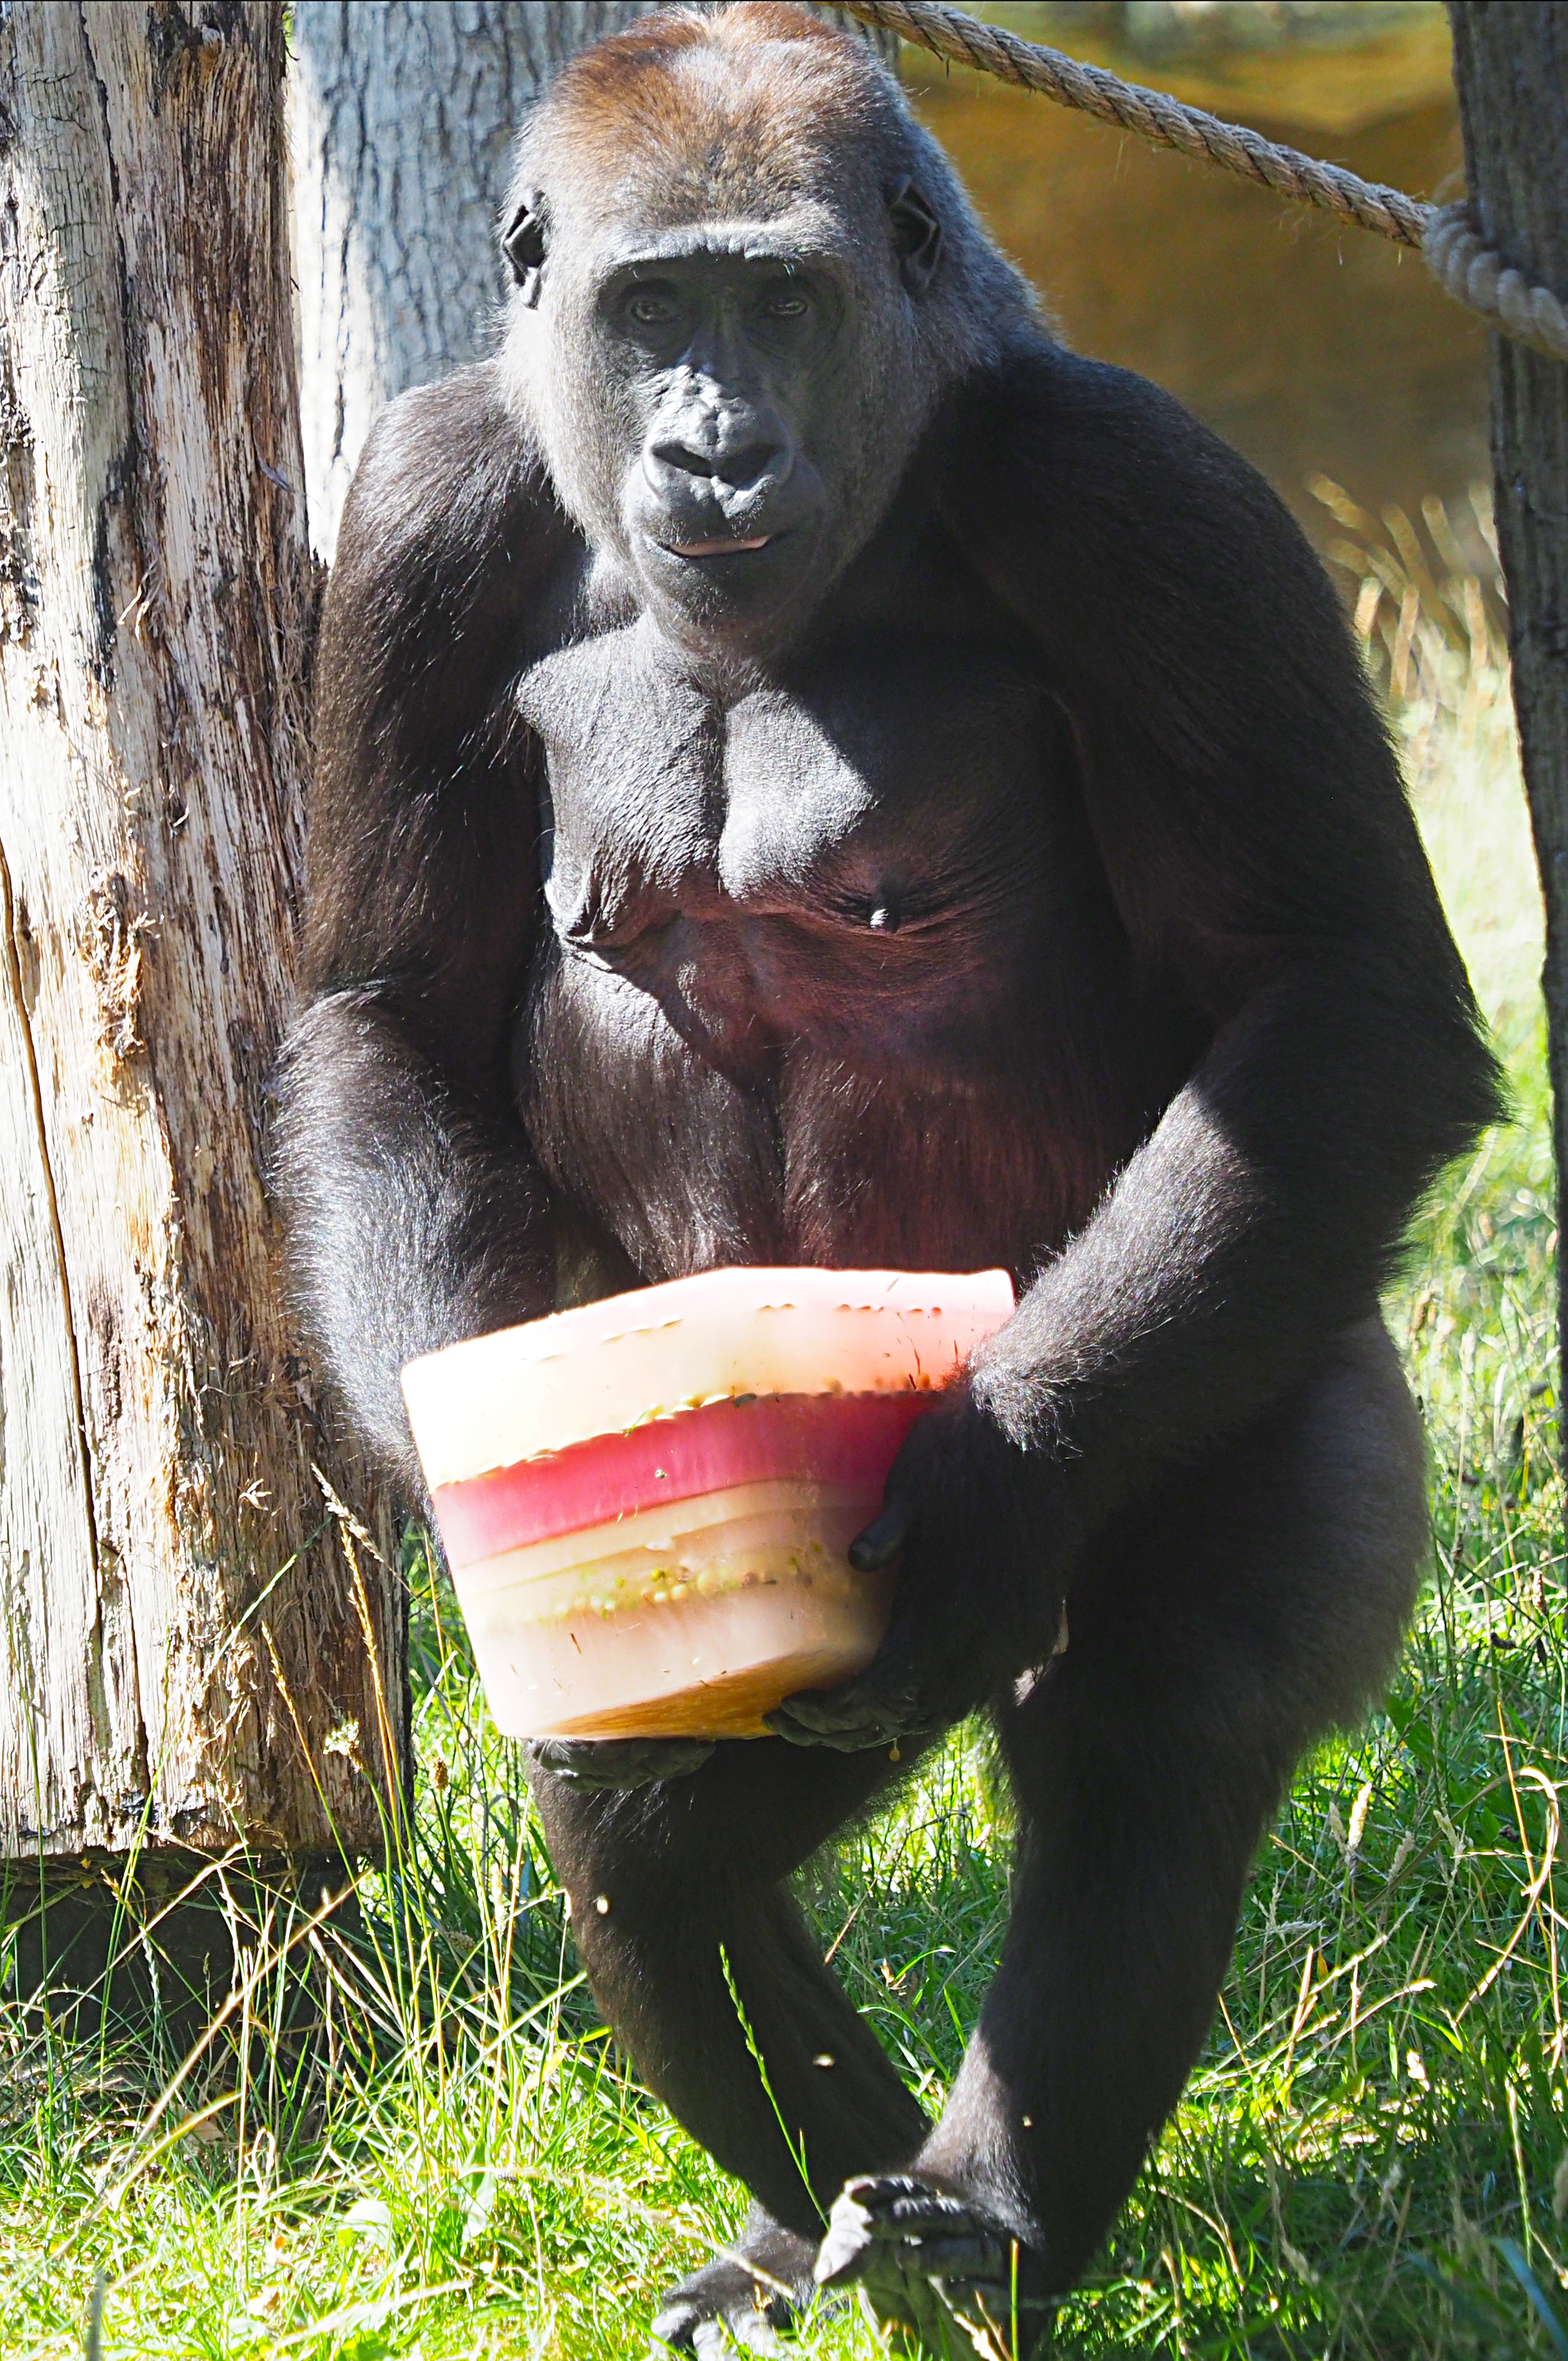 Western lowland gorilla Mjukuu enjoying an ice lolly during UK heatwave (ZSL London Zoo/PA)